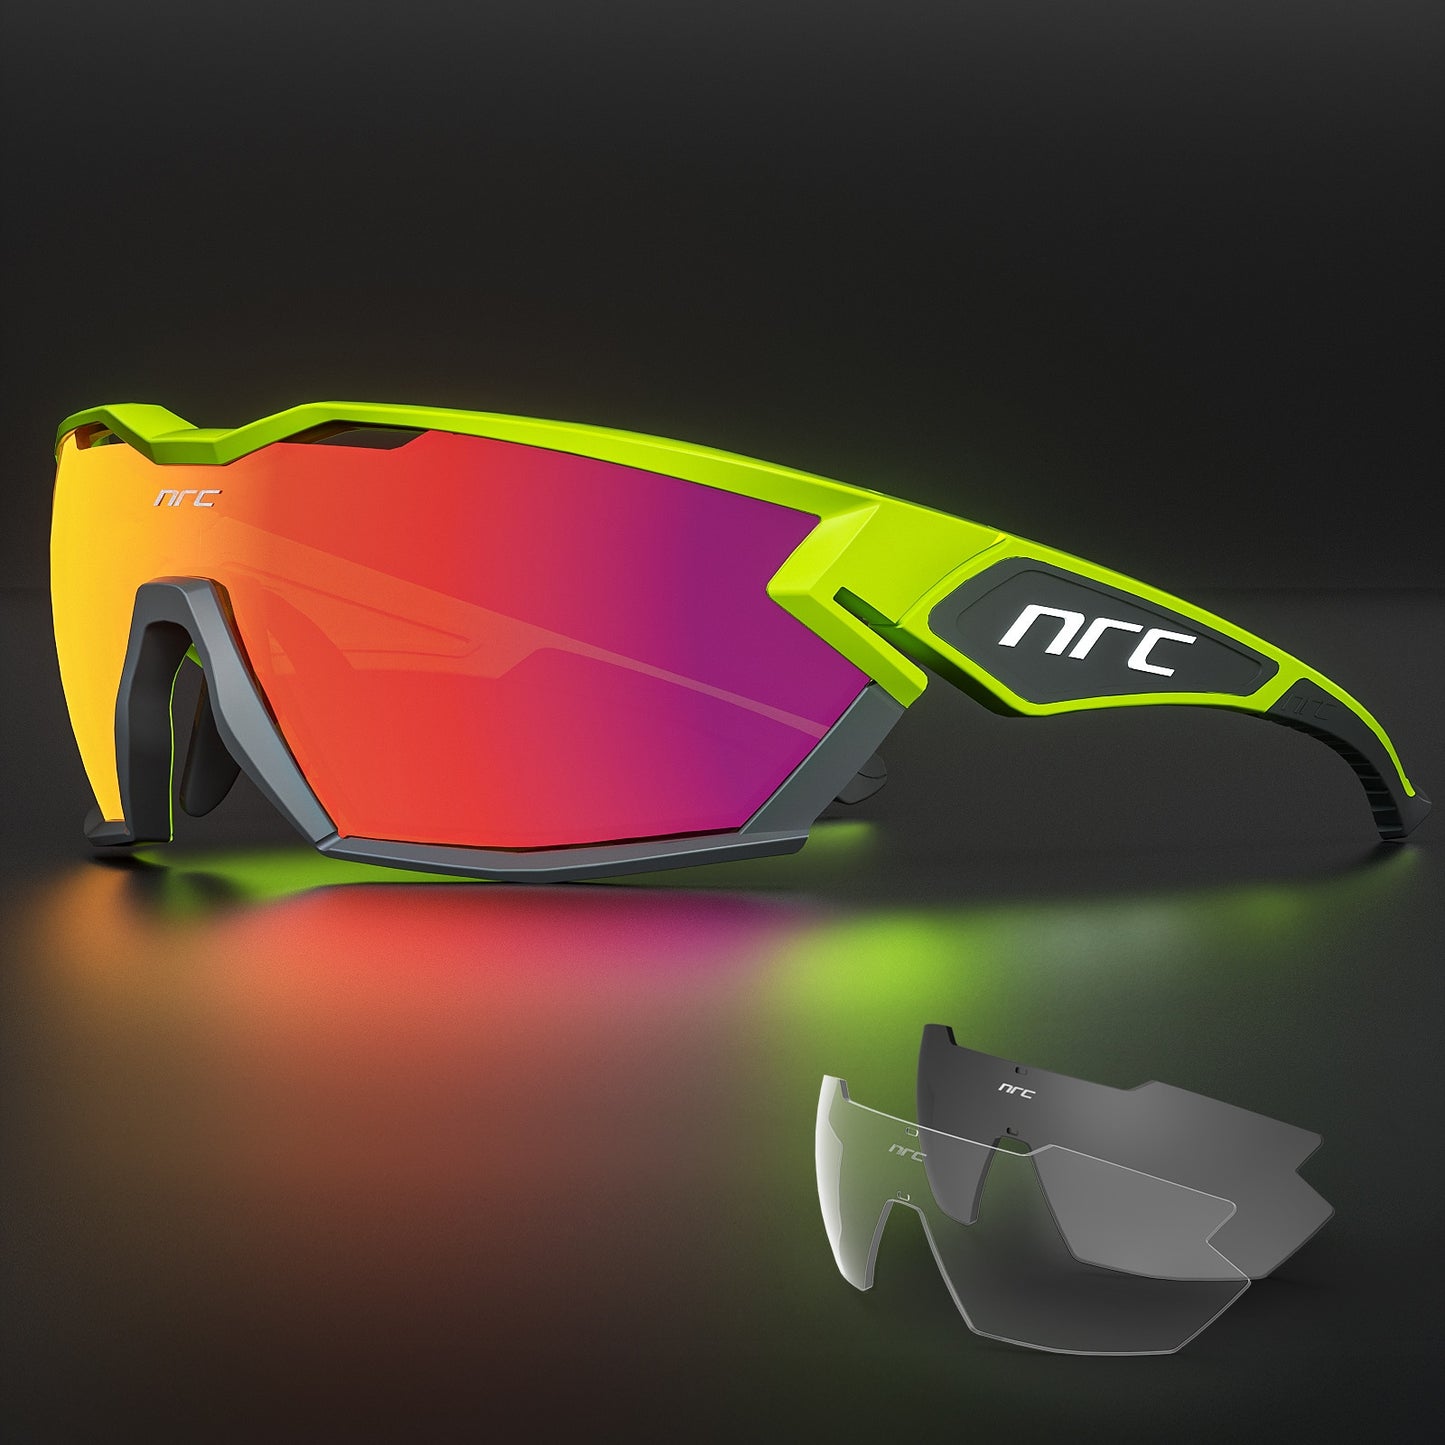 Full-frame green NRC Pro Cycling glasses